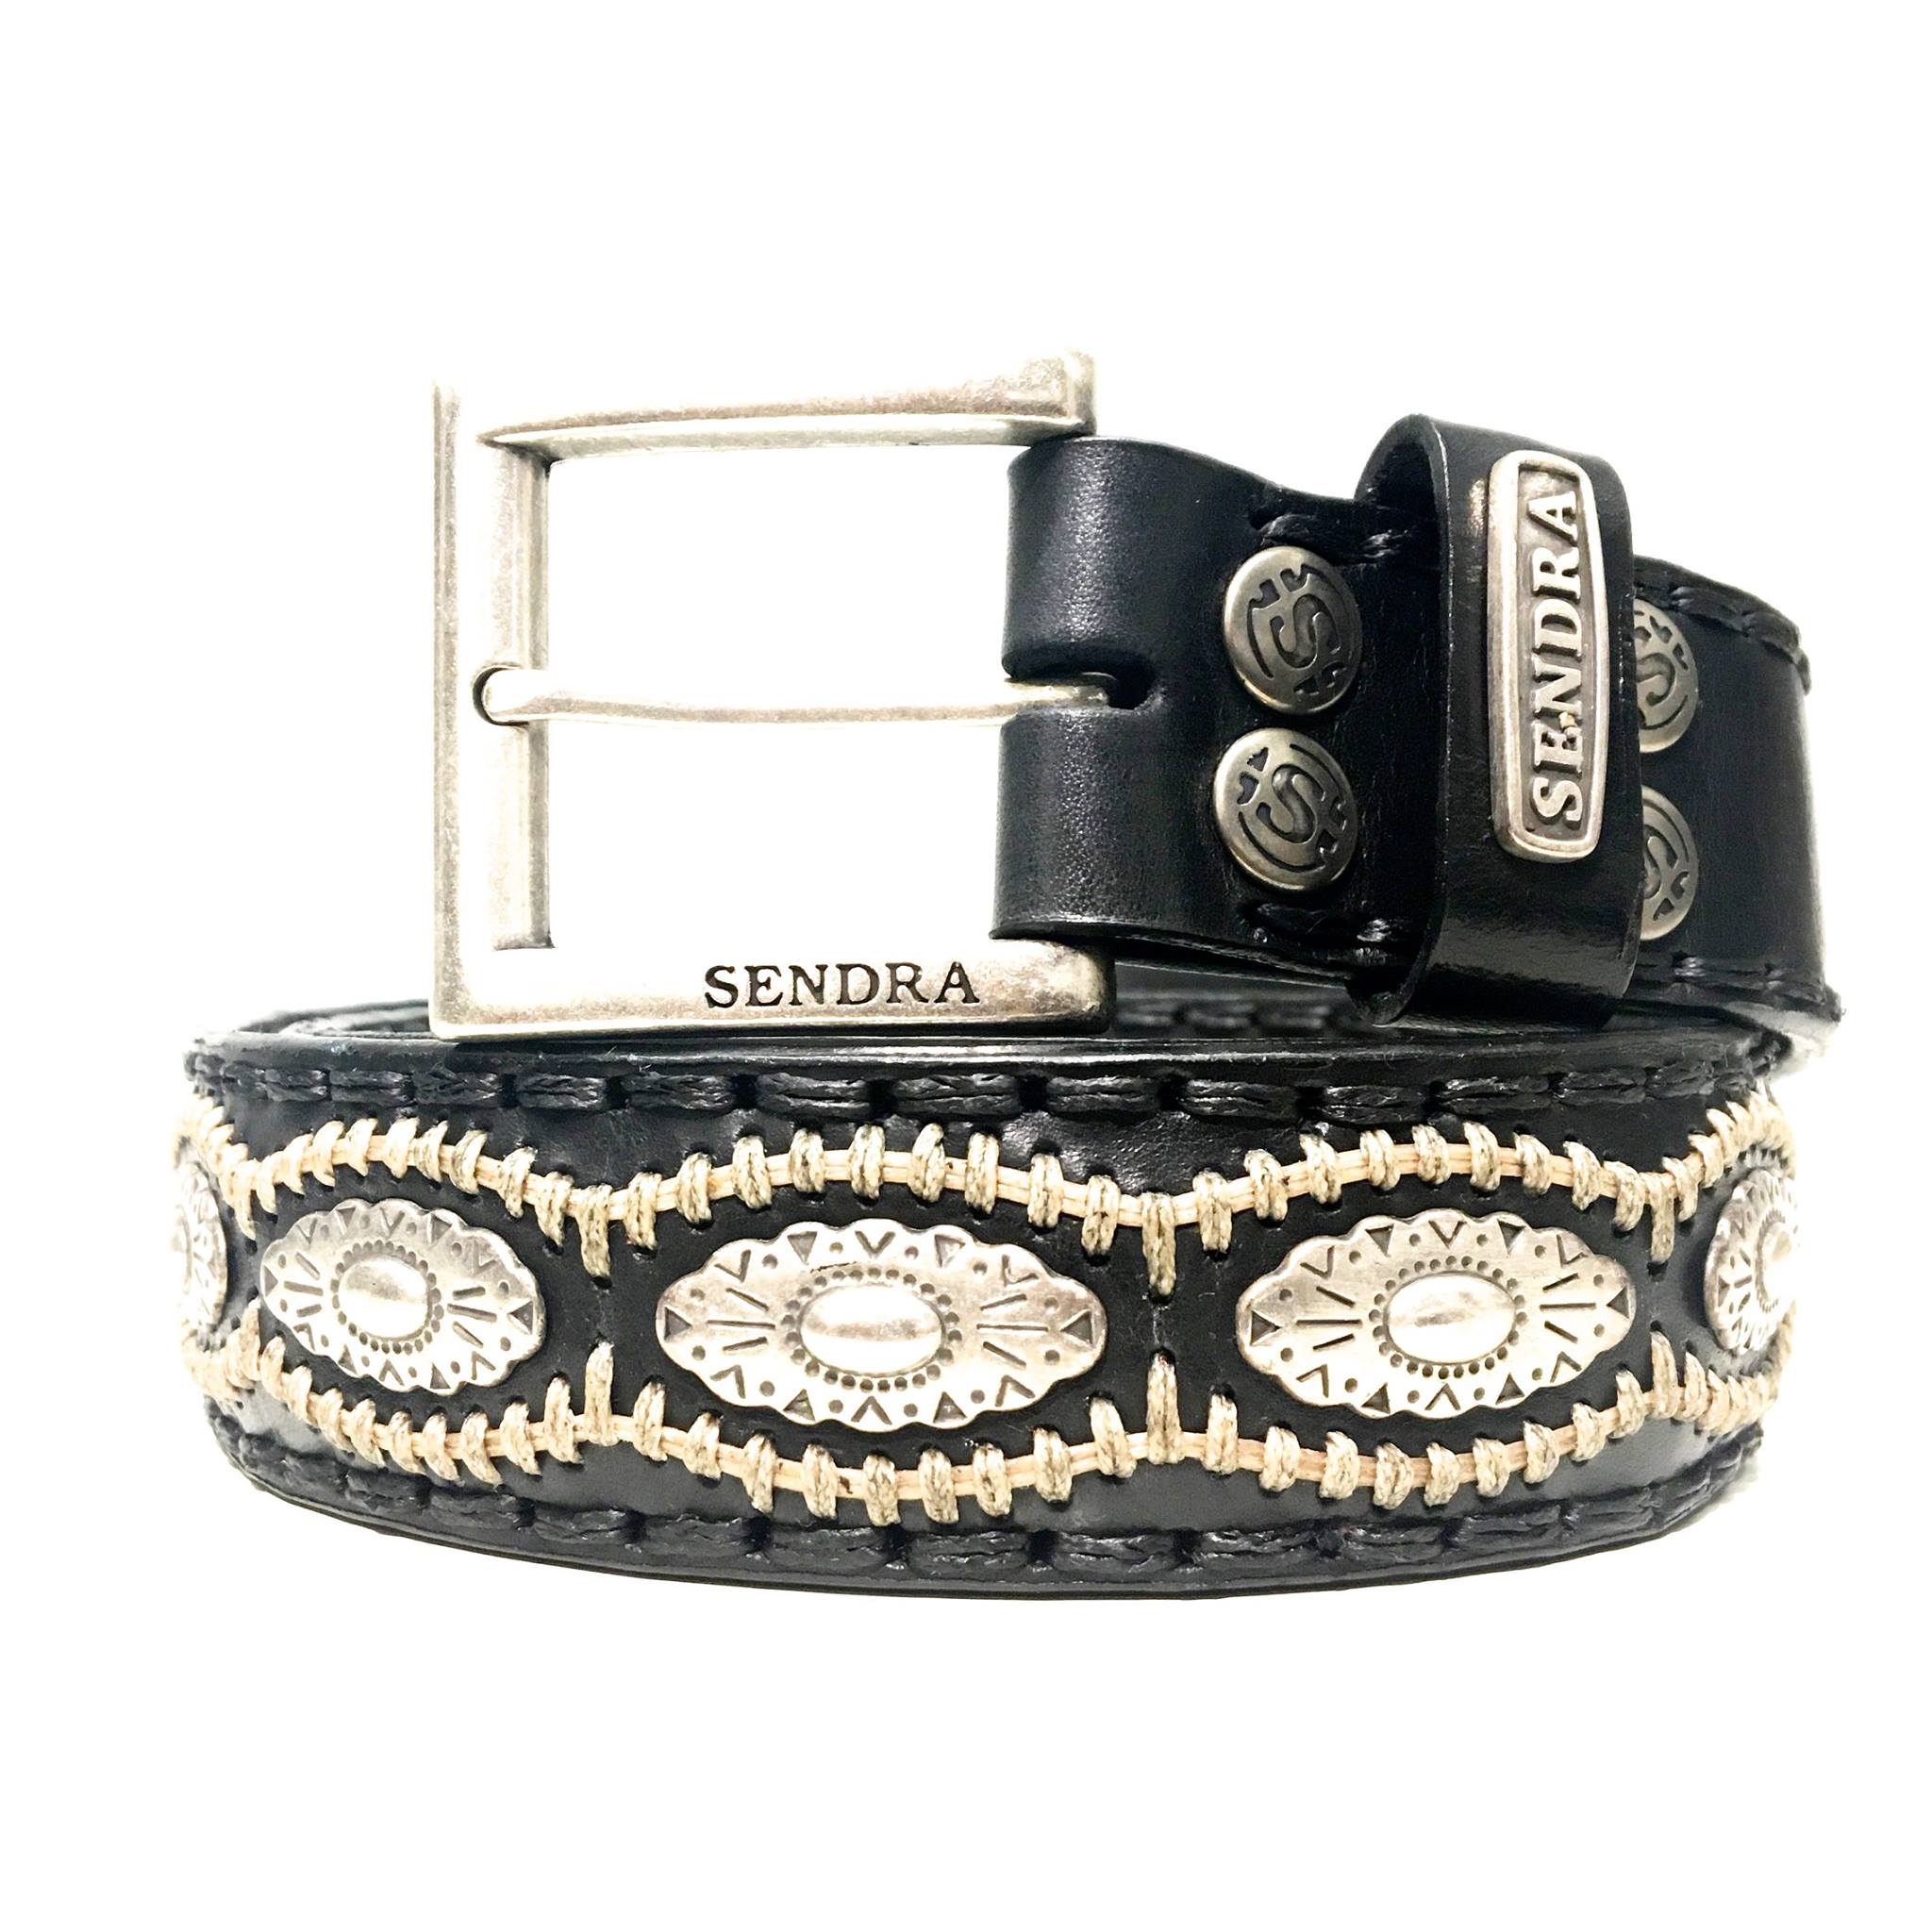 Sendra belt - 7606 zwart/creme